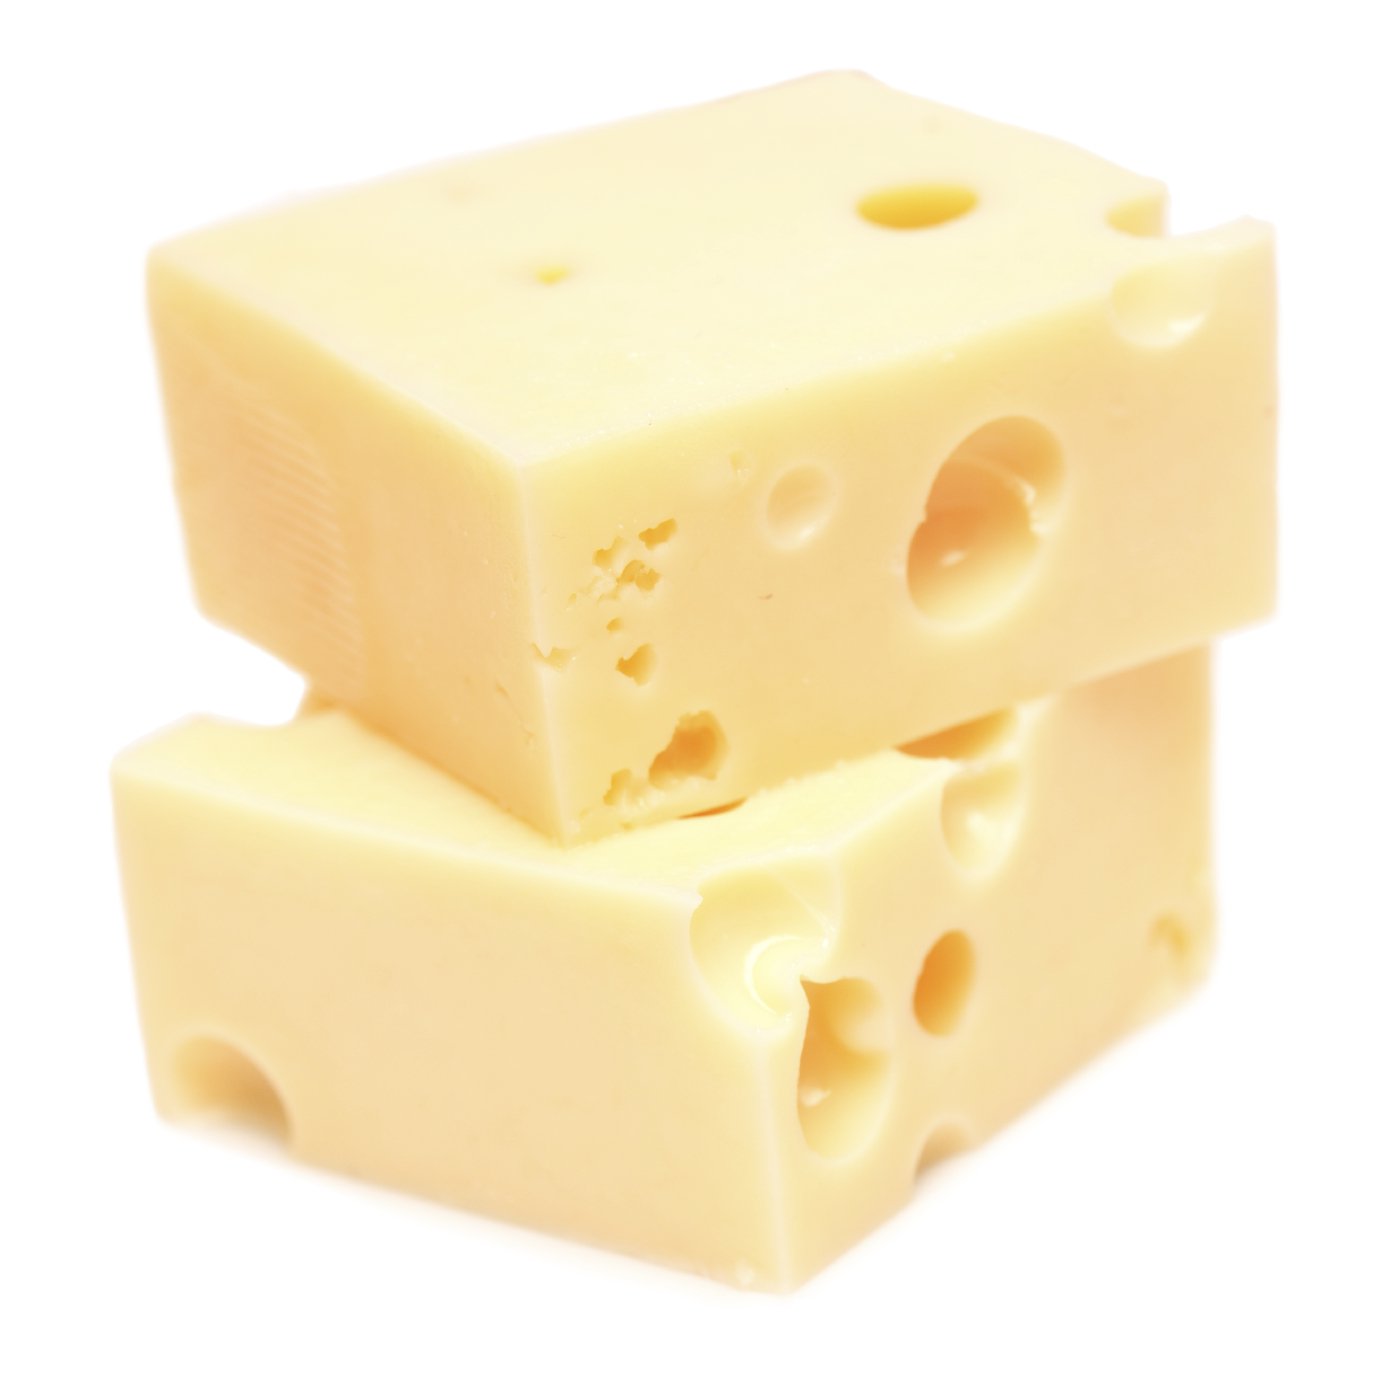 chudnut co jest syr